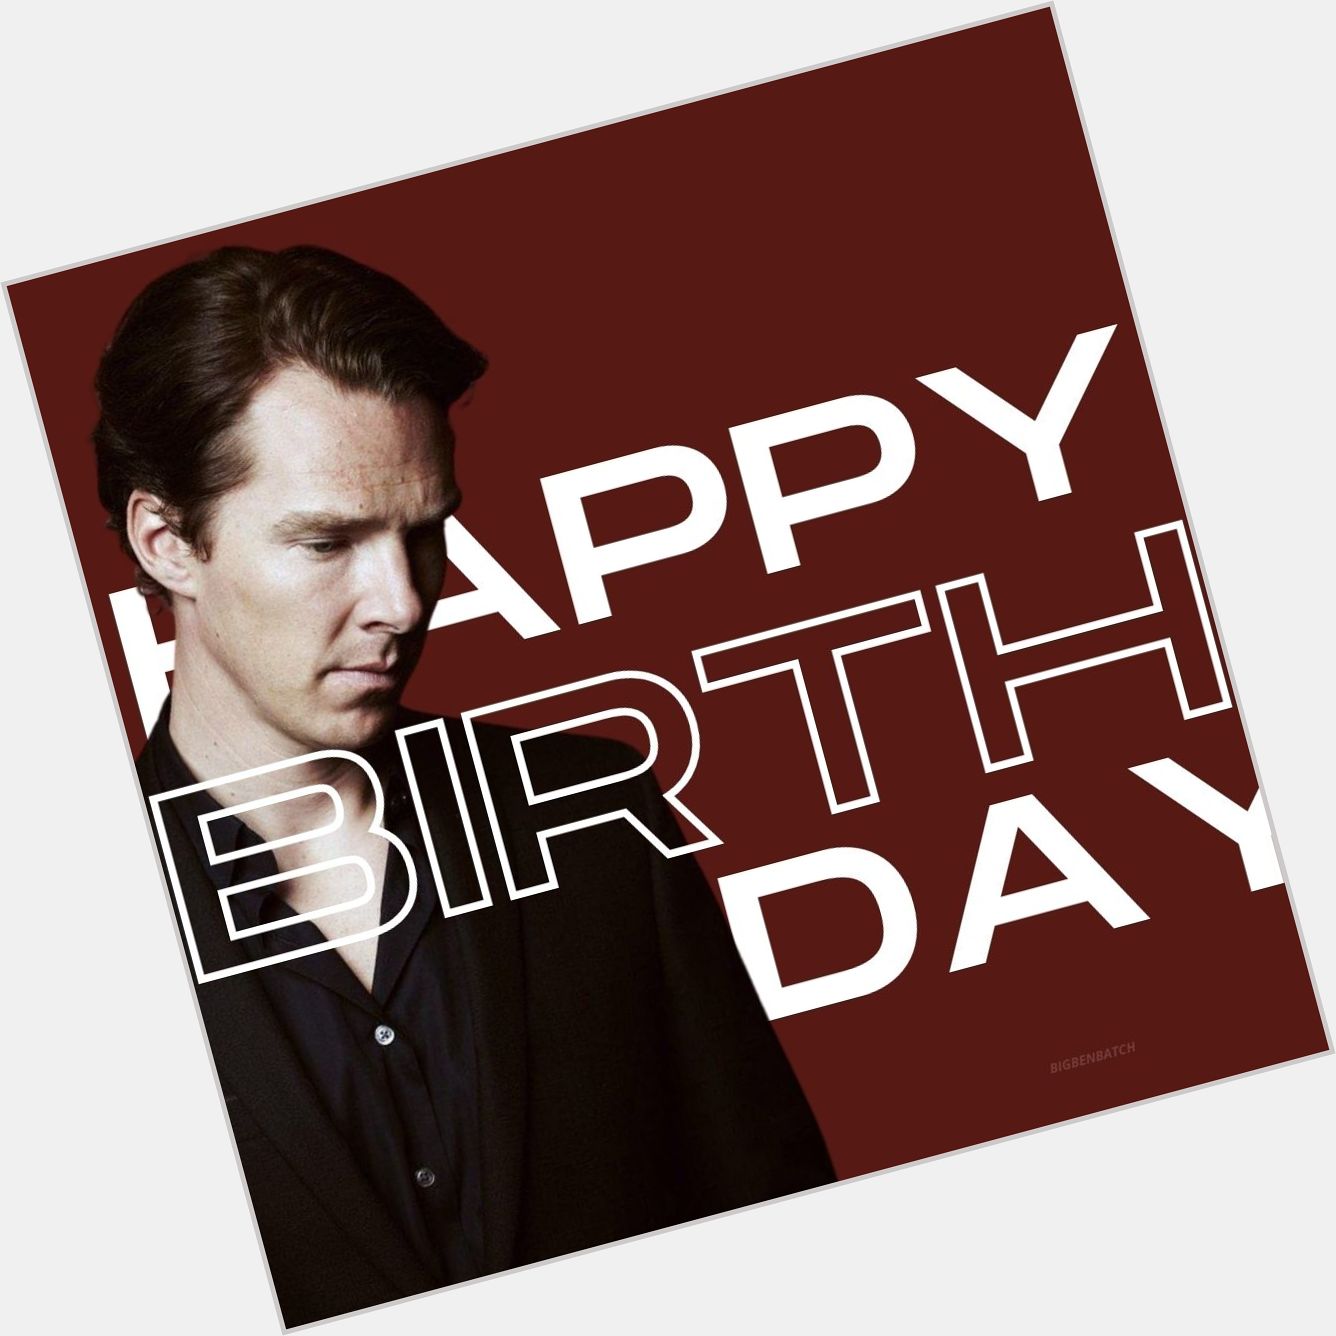 Happy 45th Birthday to Benedict Cumberbatch!  